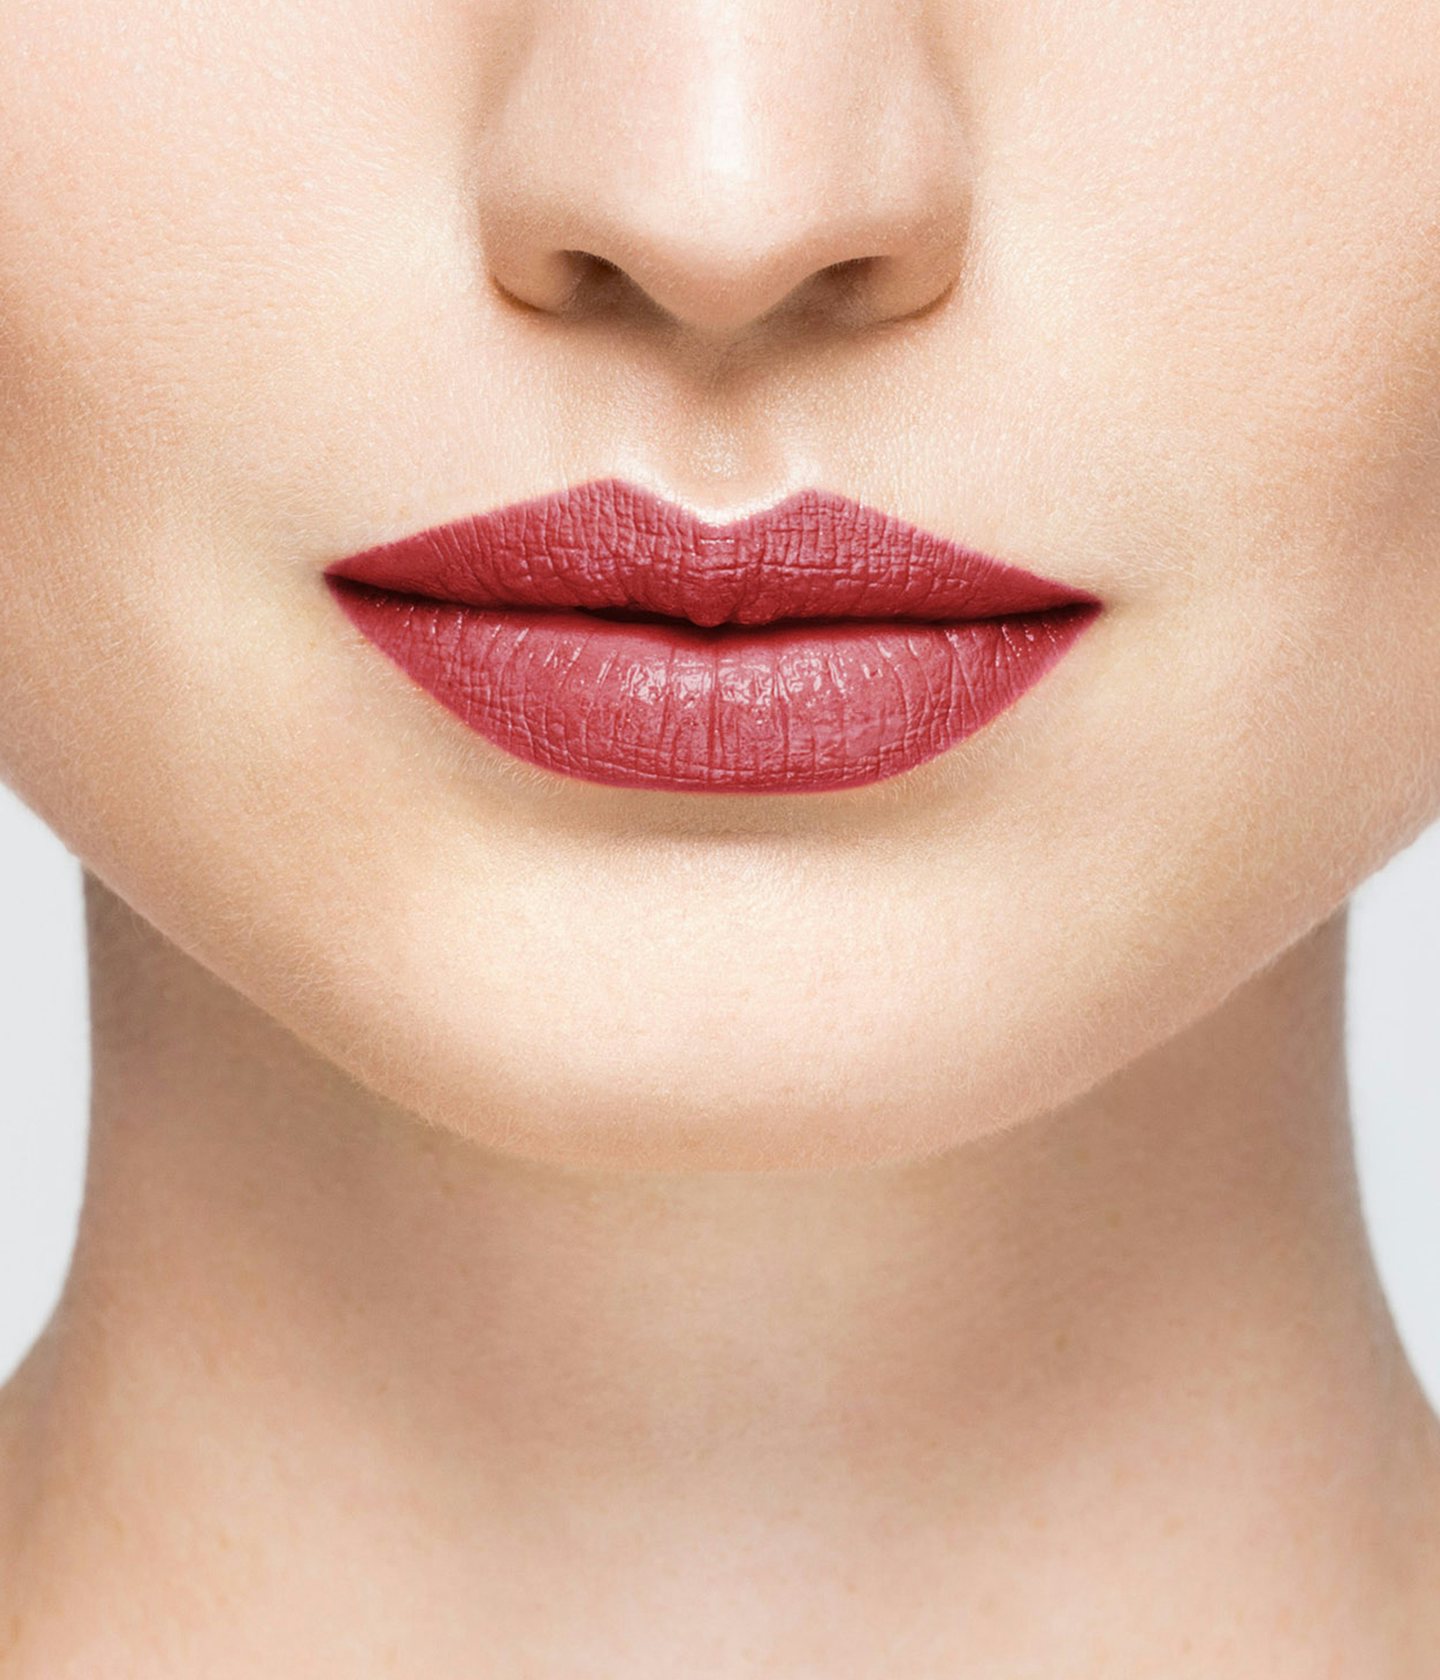 La bouche rouge Brompton Road lipstick shade on the lips of a fair skin model